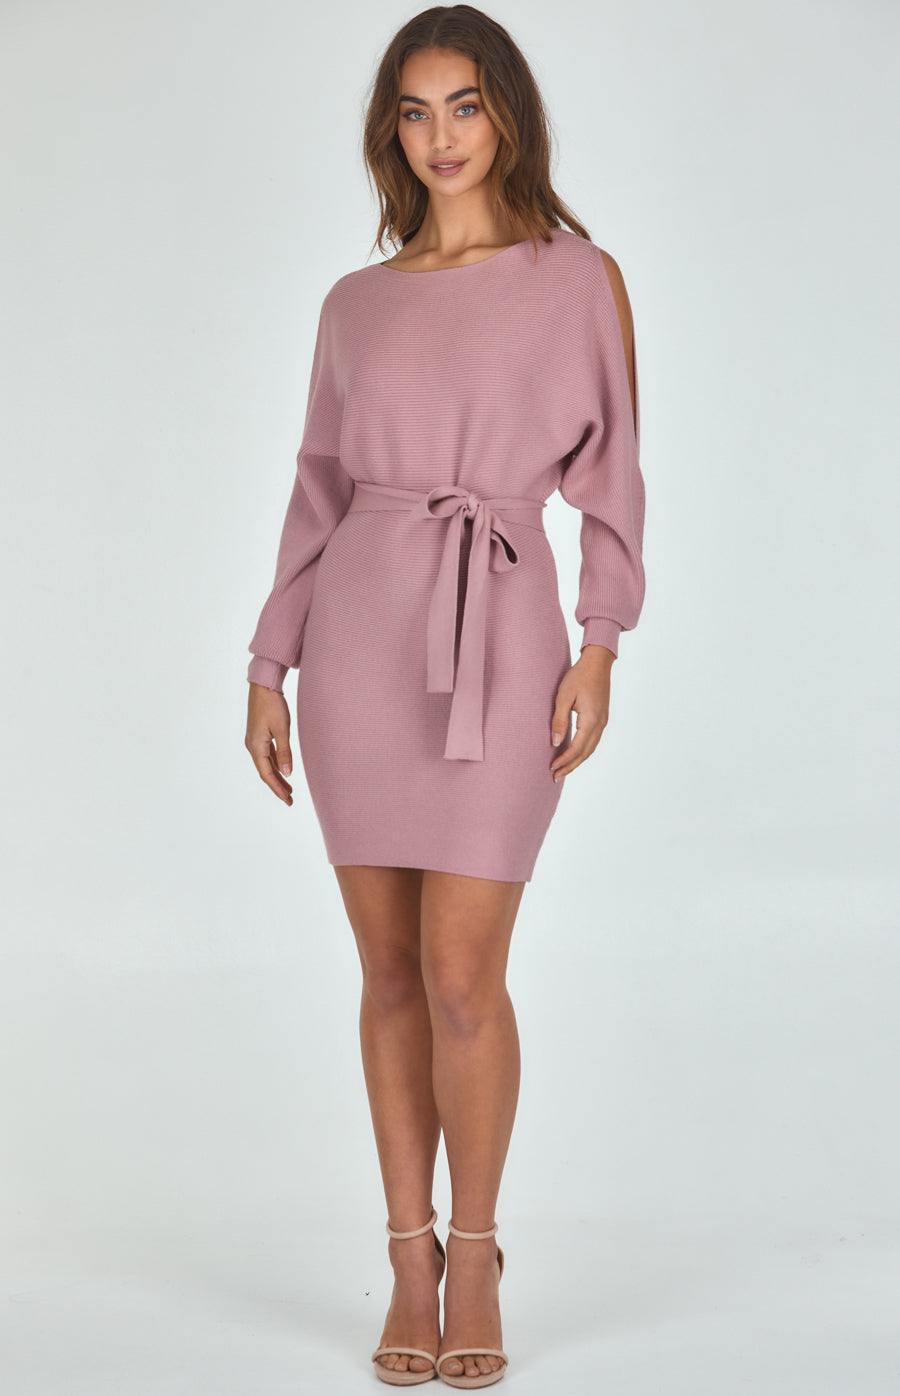 Florence Knit Dress - Blush